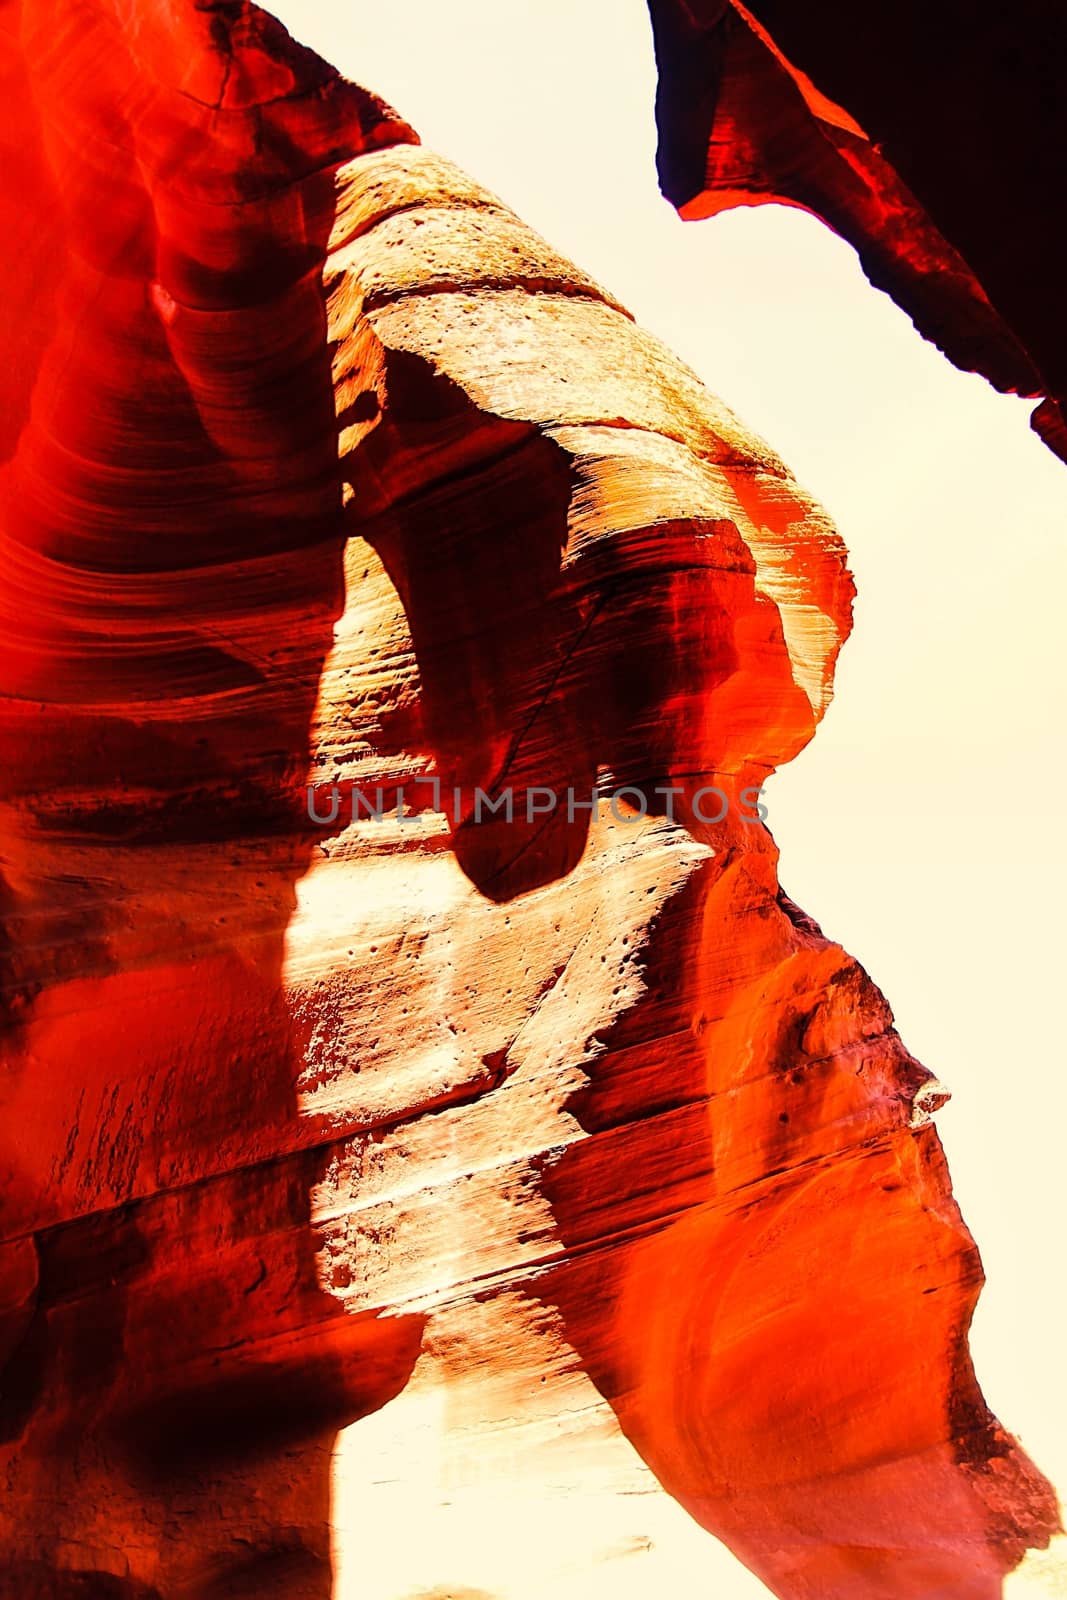 rock at Antelope Canyon,USA that look like a human face